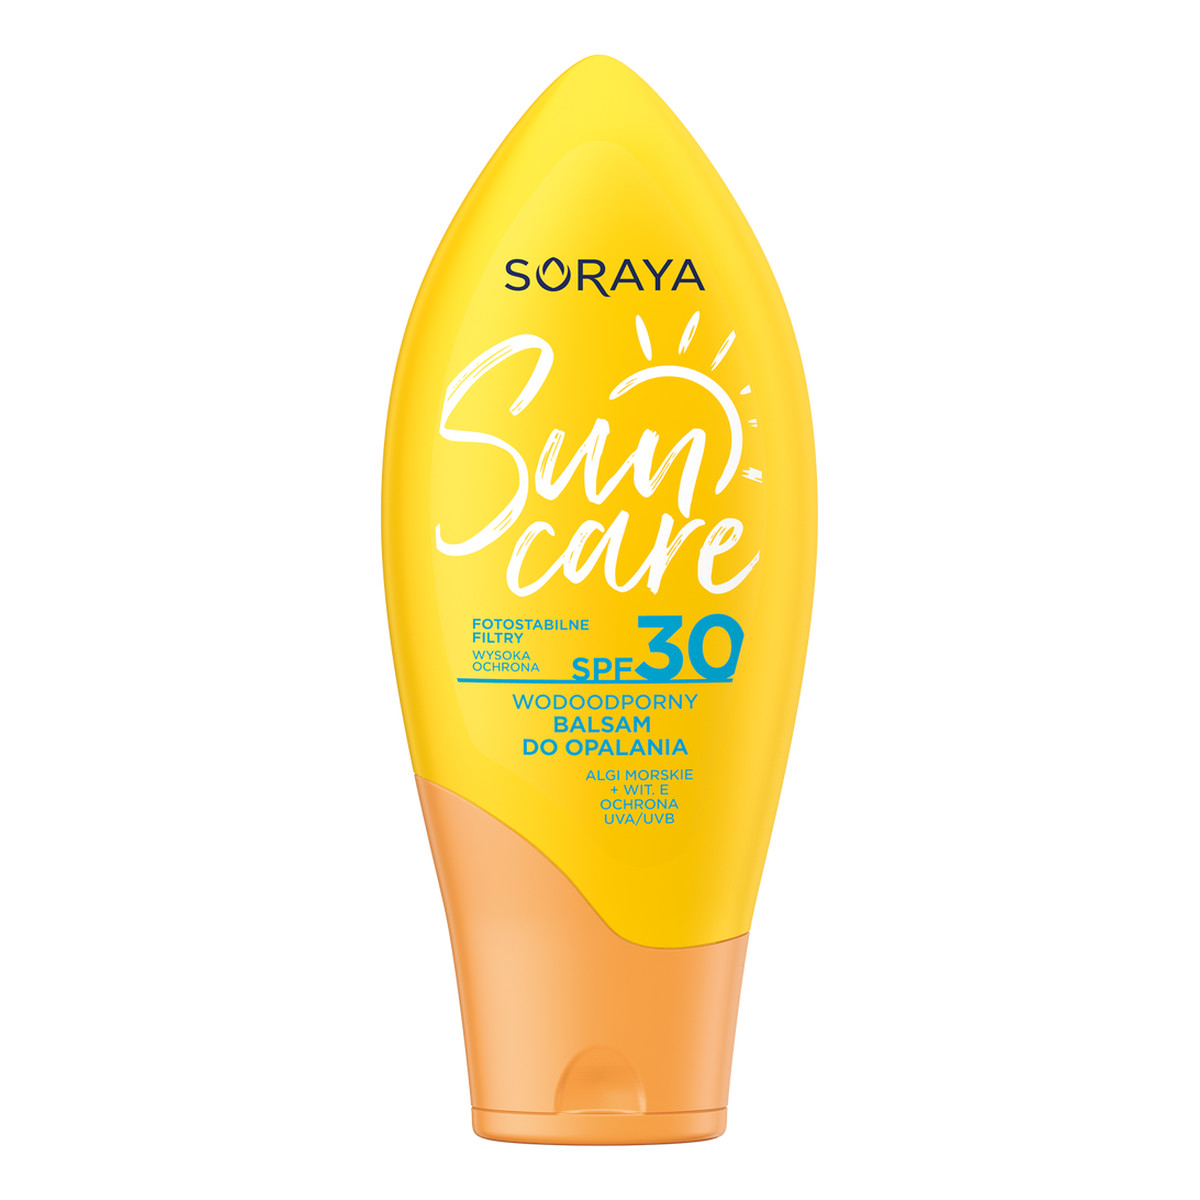 Soraya Sun Care SPF 30 Wodoodporny balsam do opalania 150ml